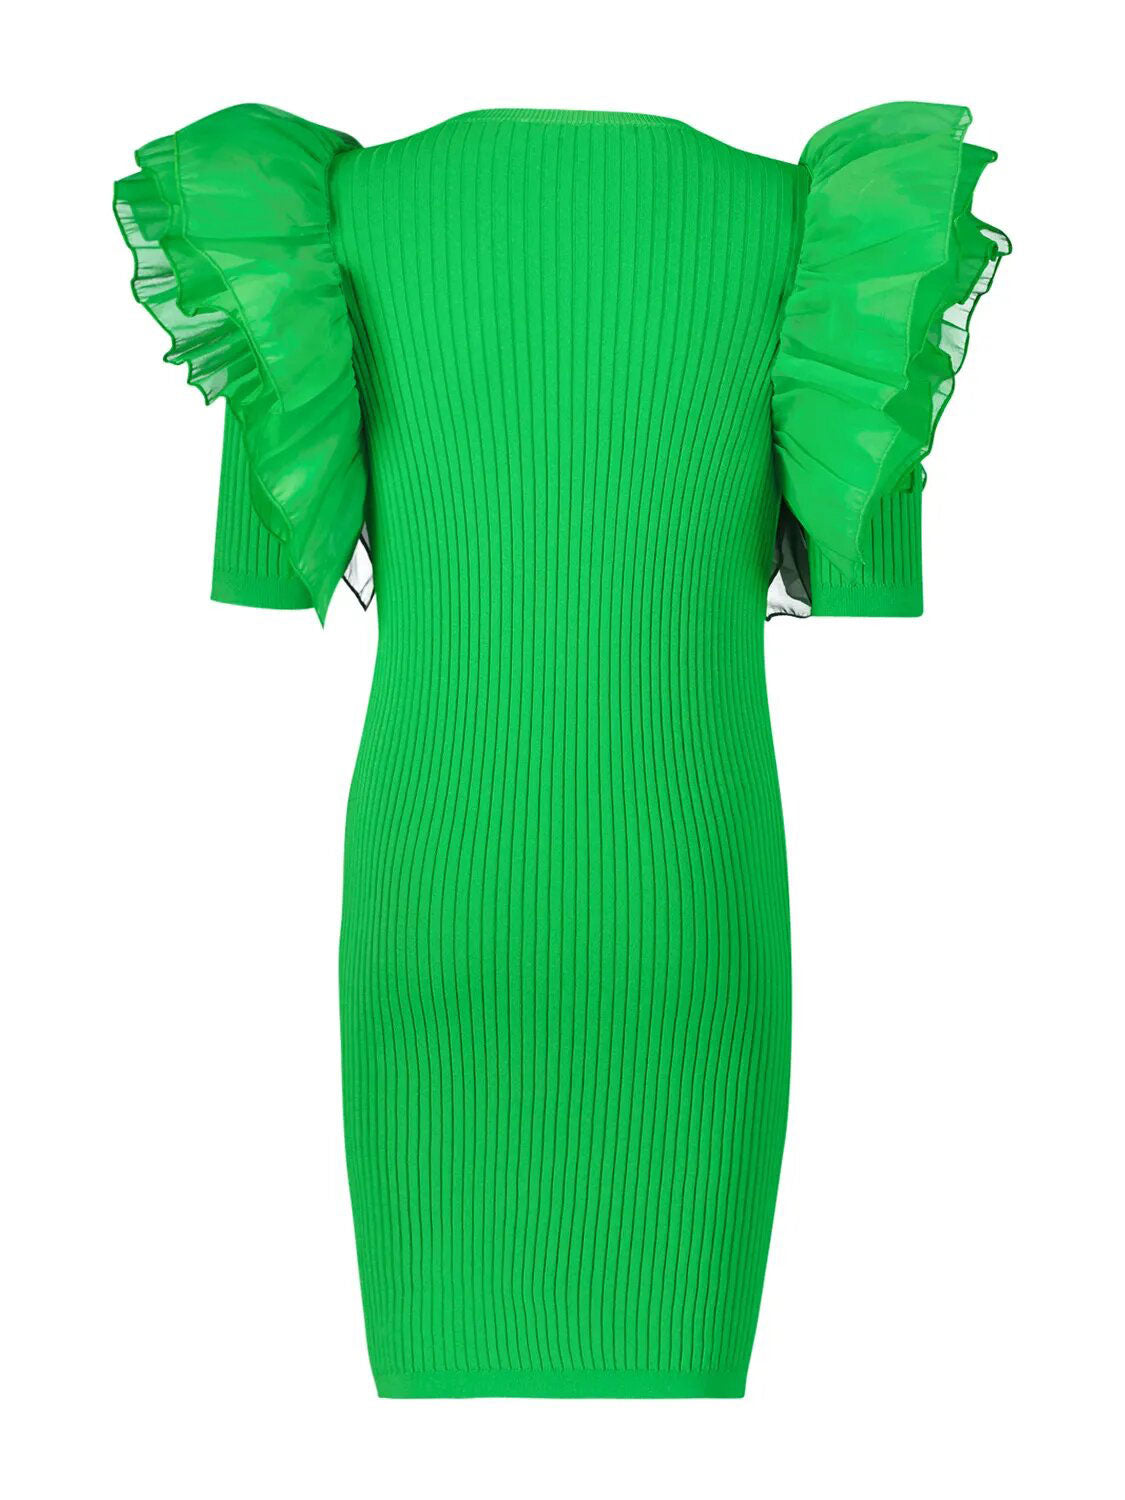 Twinset Πράσινο φόρεμα με μανίκια οργάντζα